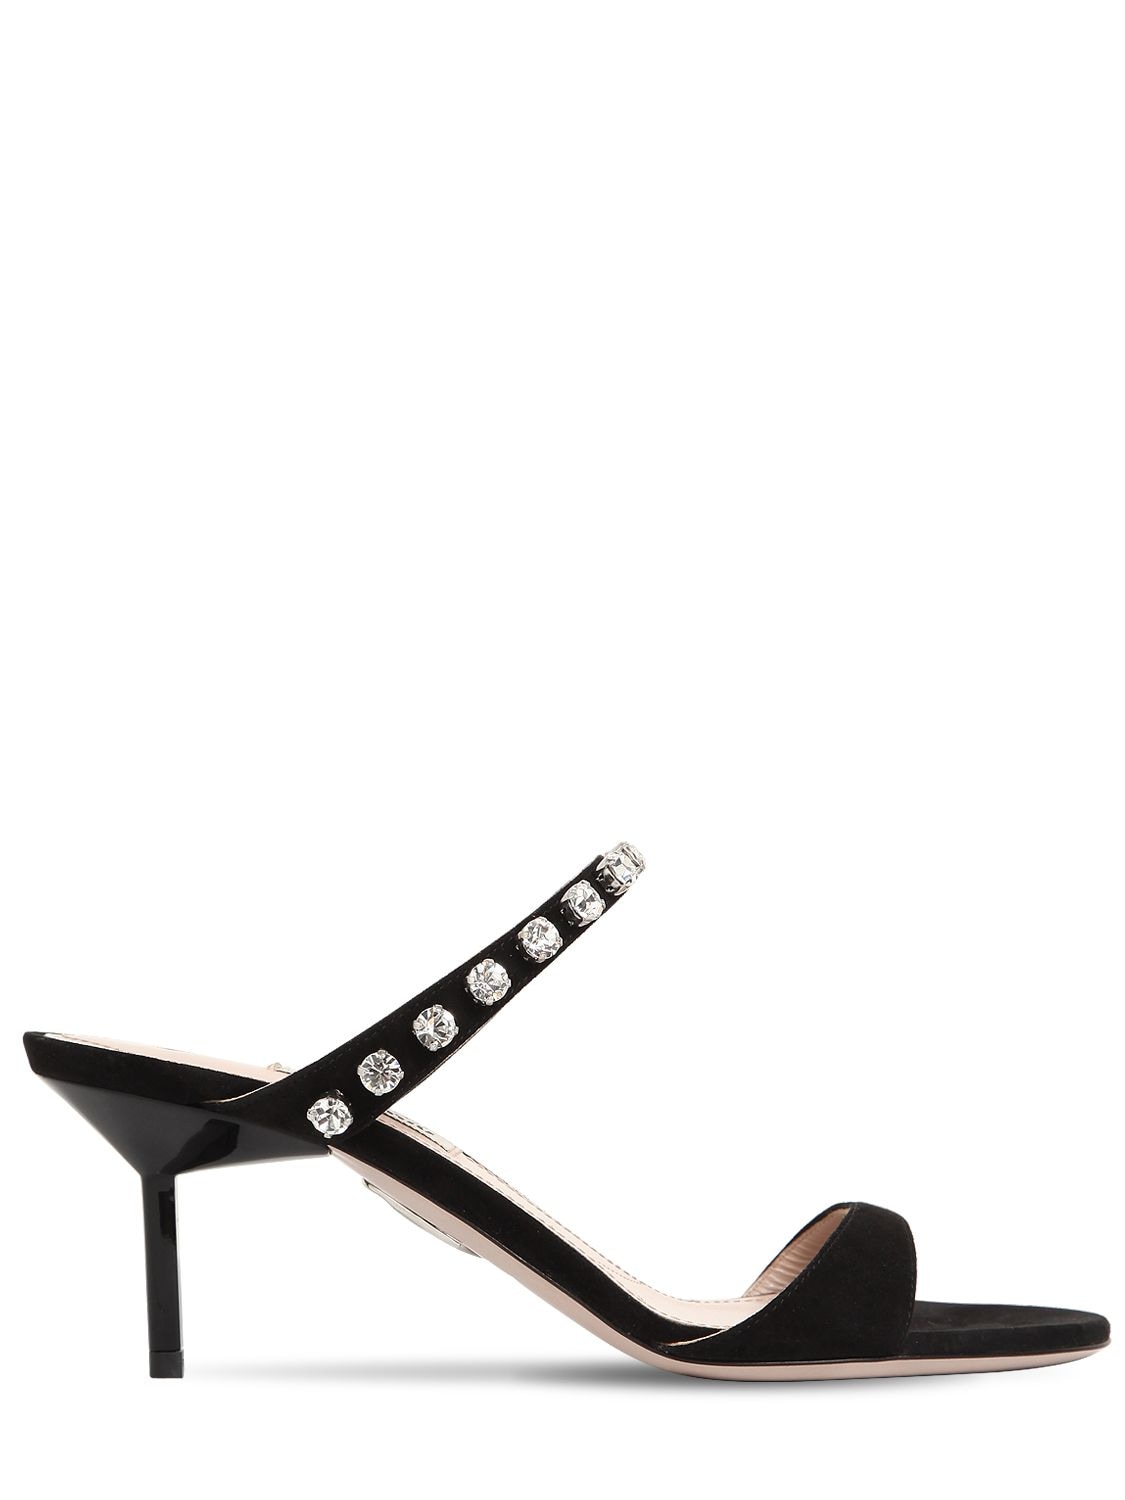 Miu Miu 65mm Embellished Suede Sandals In Black